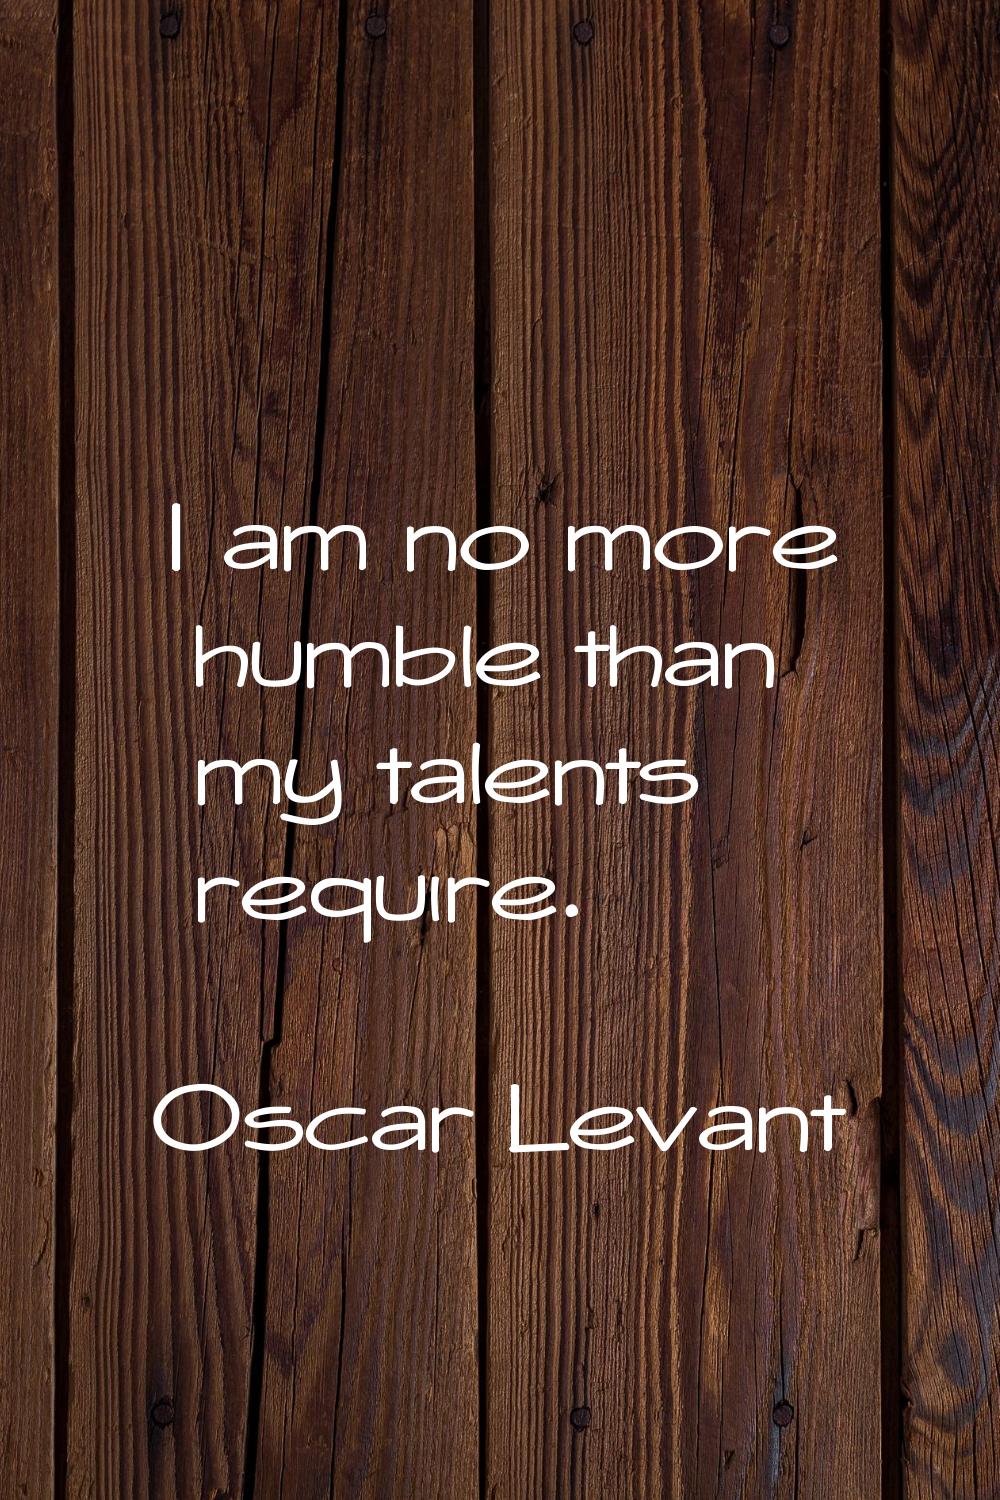 I am no more humble than my talents require.